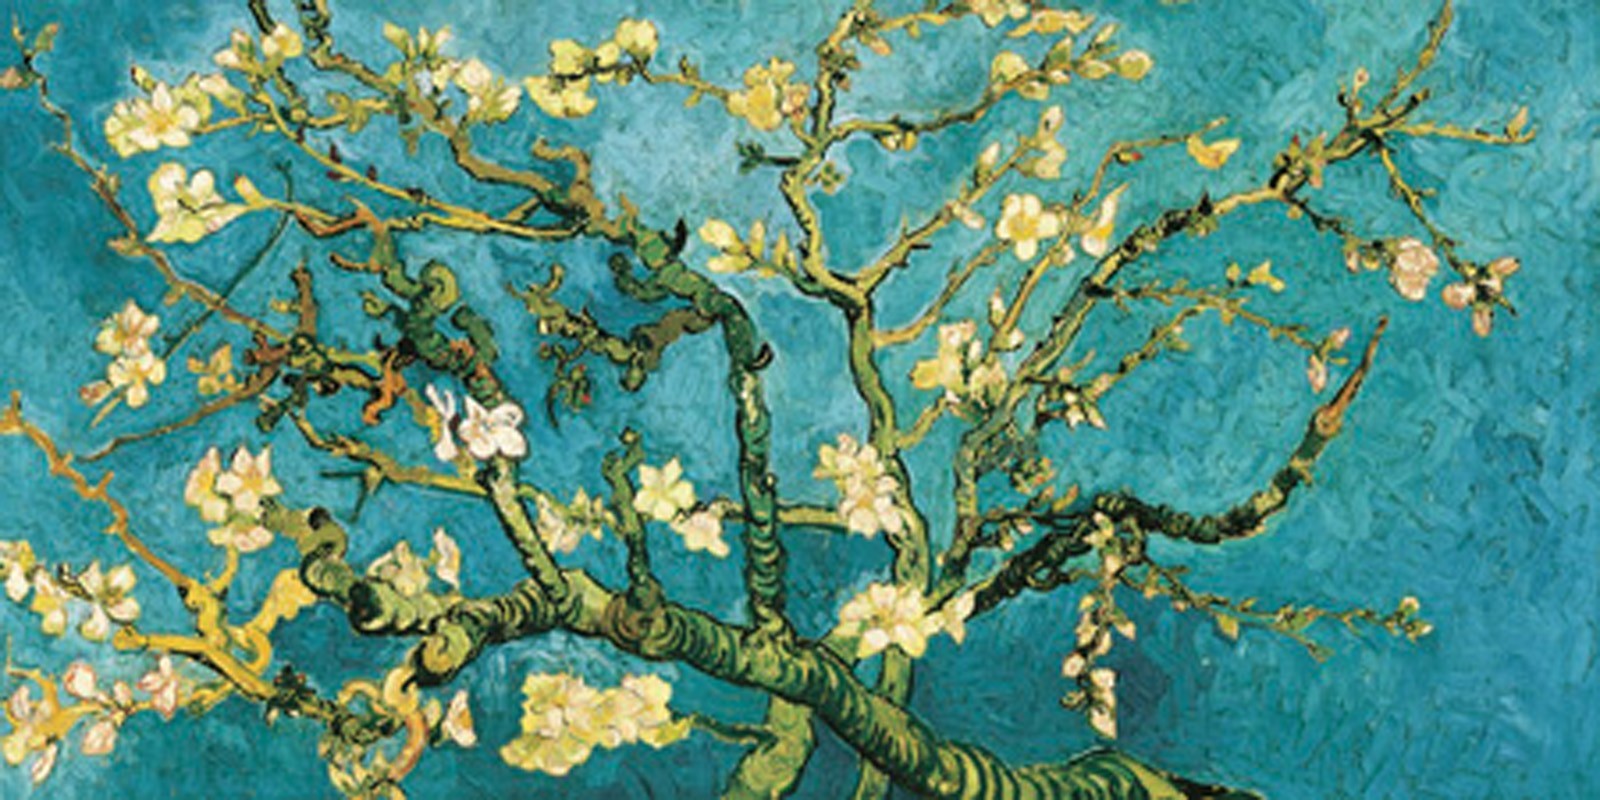 Vincent Van Gogh - Mandorlo in fiore (detail)